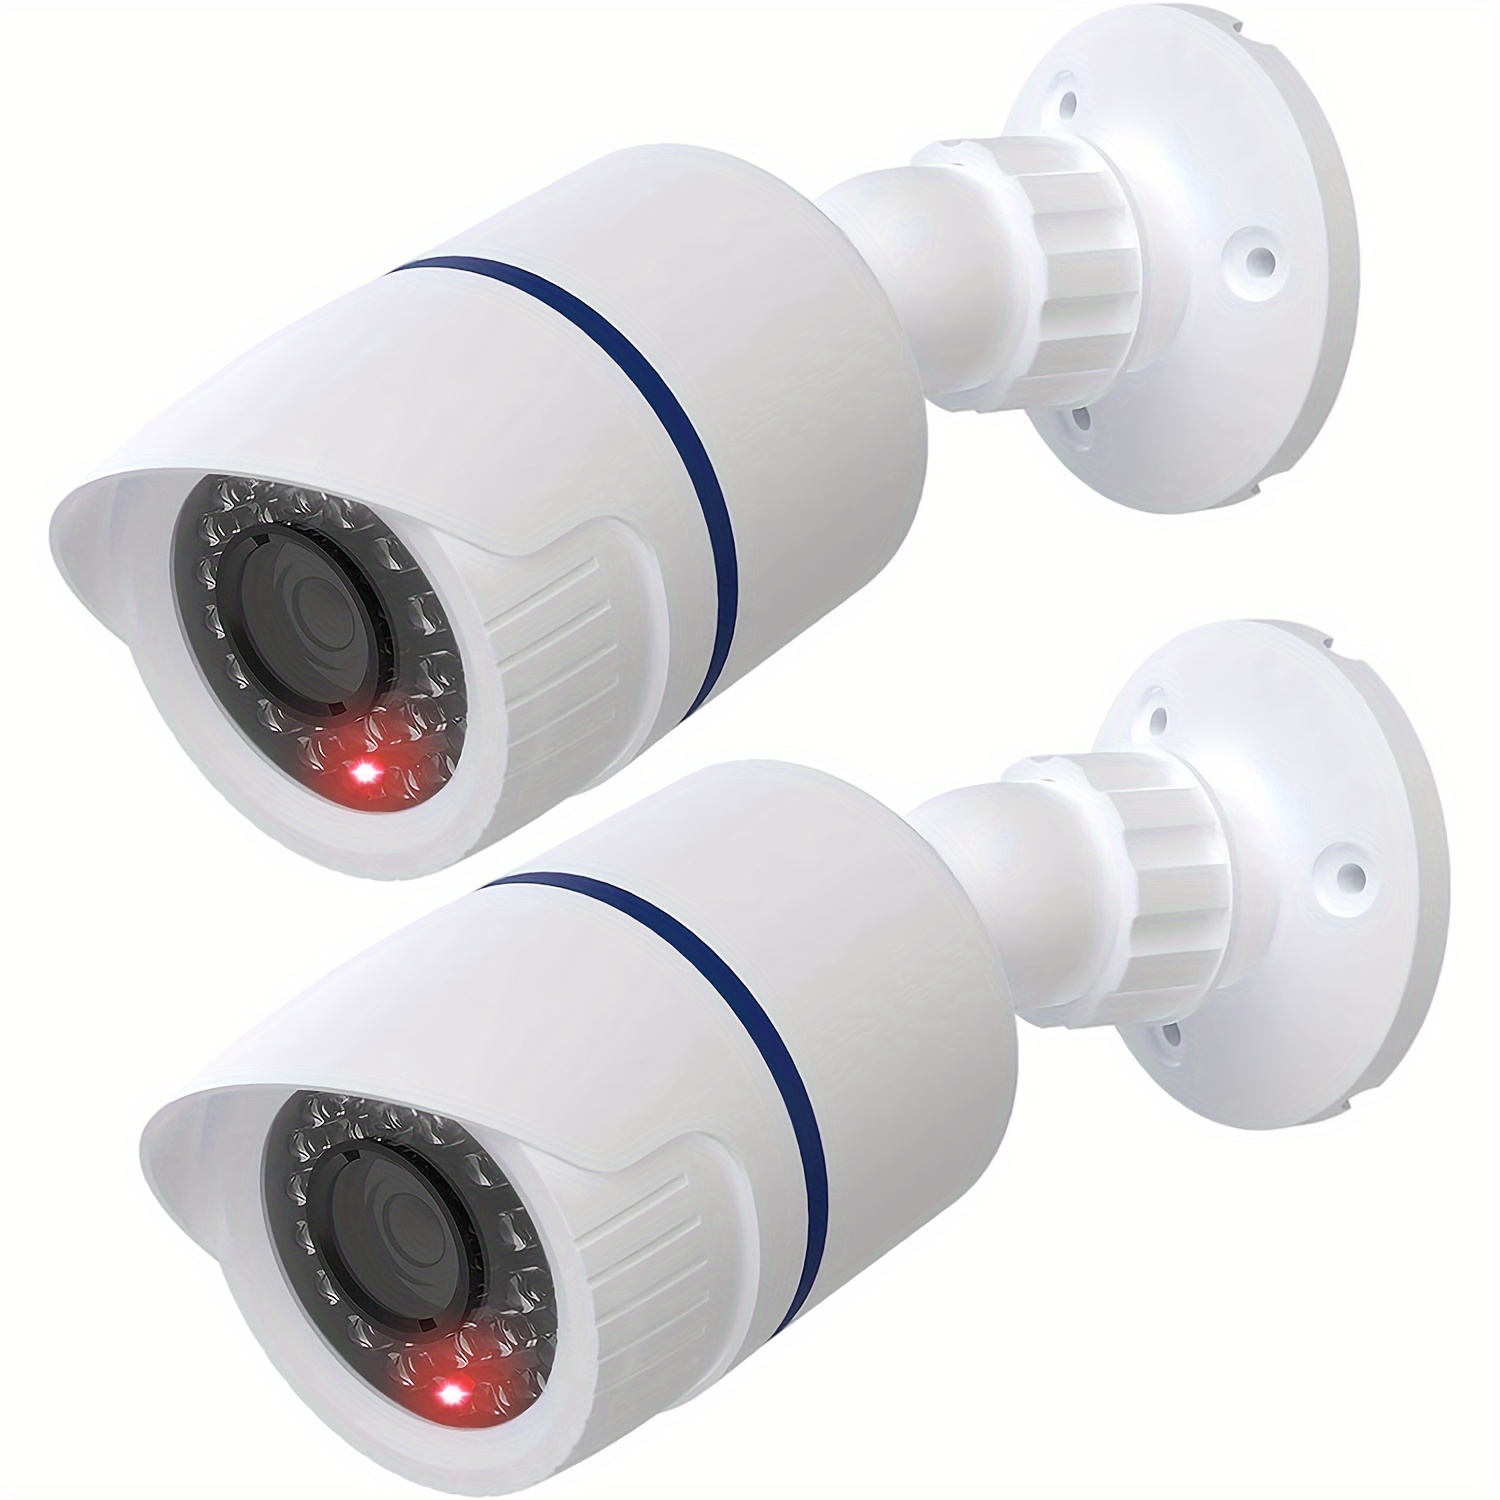  Cámara falsa falsa, cámara de seguridad de vigilancia simulada  CCTV falsa con etiqueta de advertencia de luz LED roja intermitente :  Electrónica